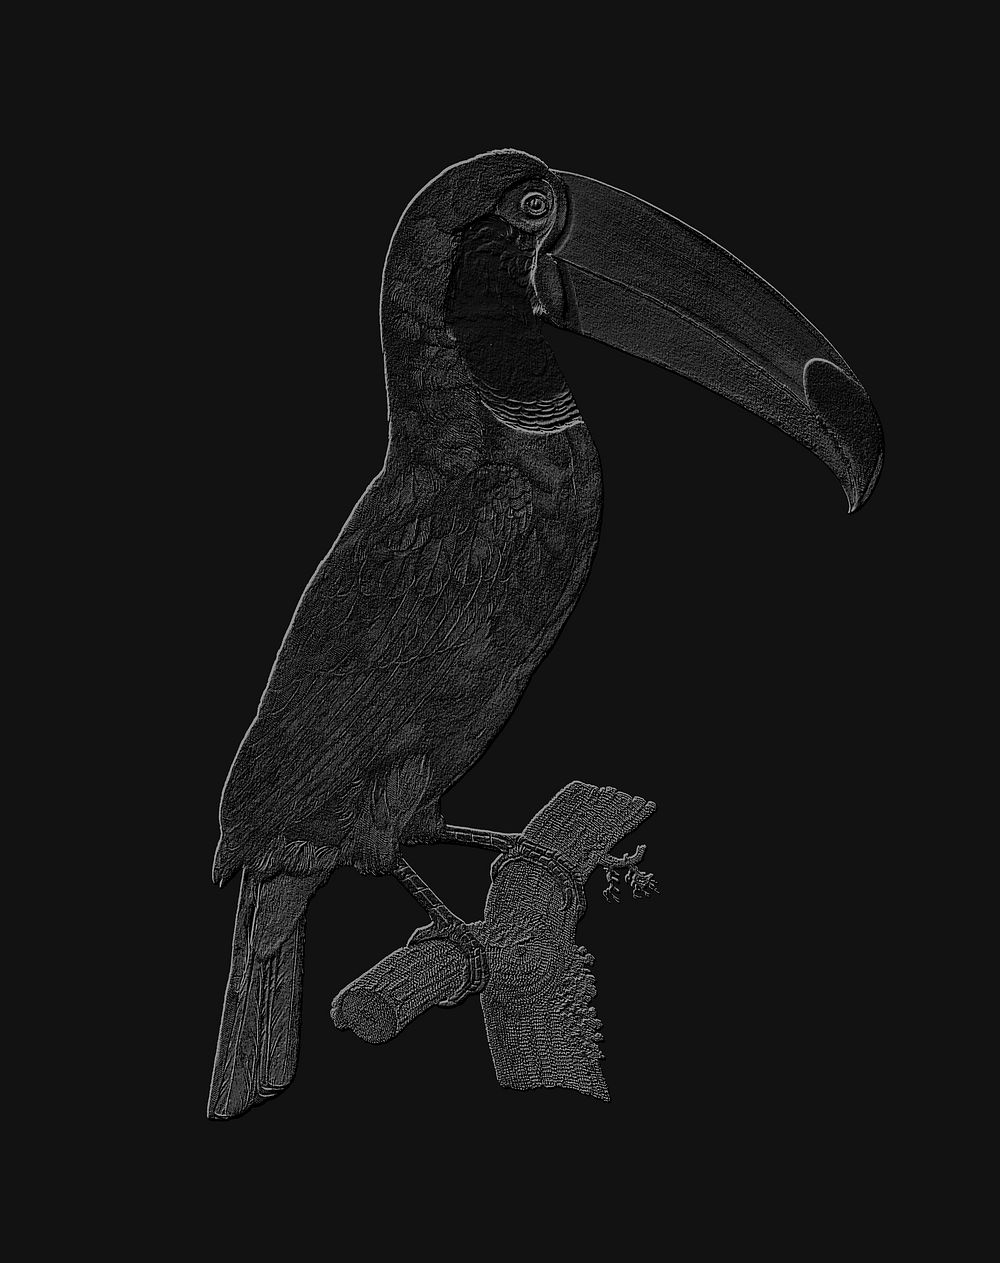 Embossed Toco toucan vintage illustration, remix from original artwork.